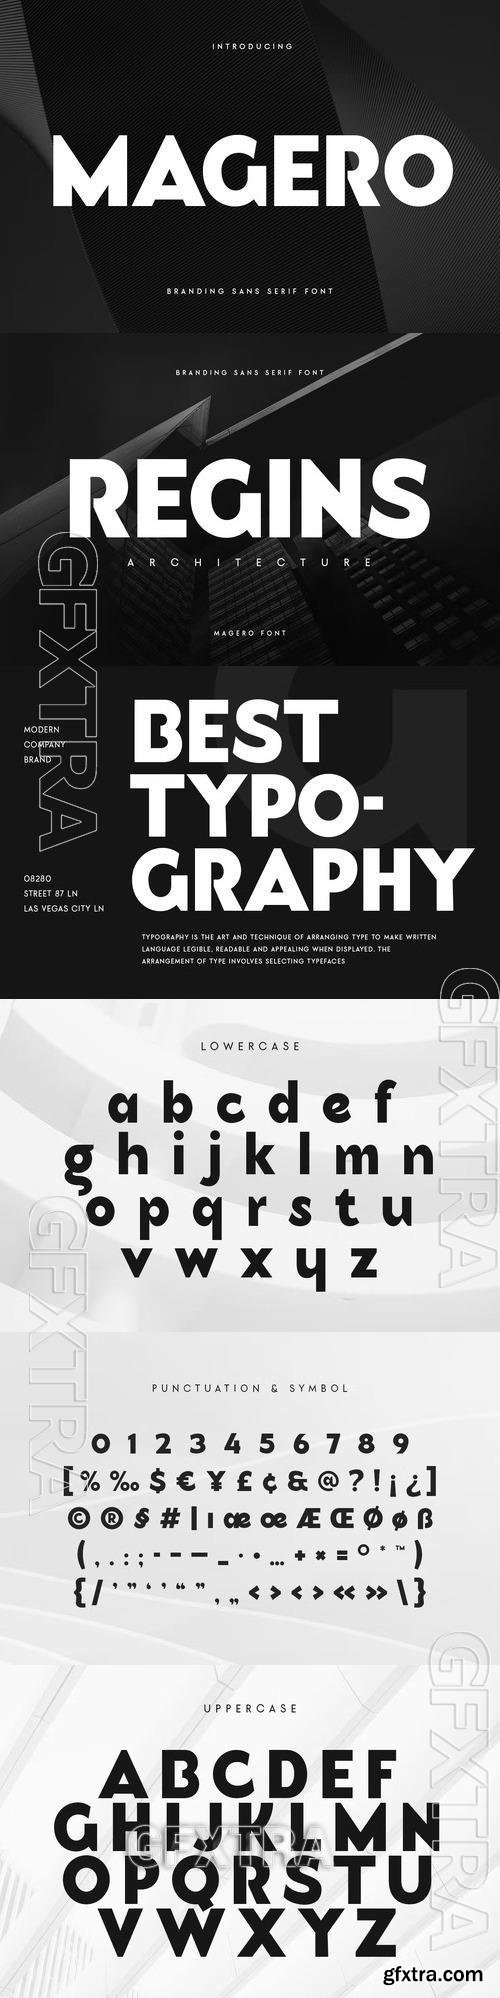 Magero - Branding Sans Serif Font